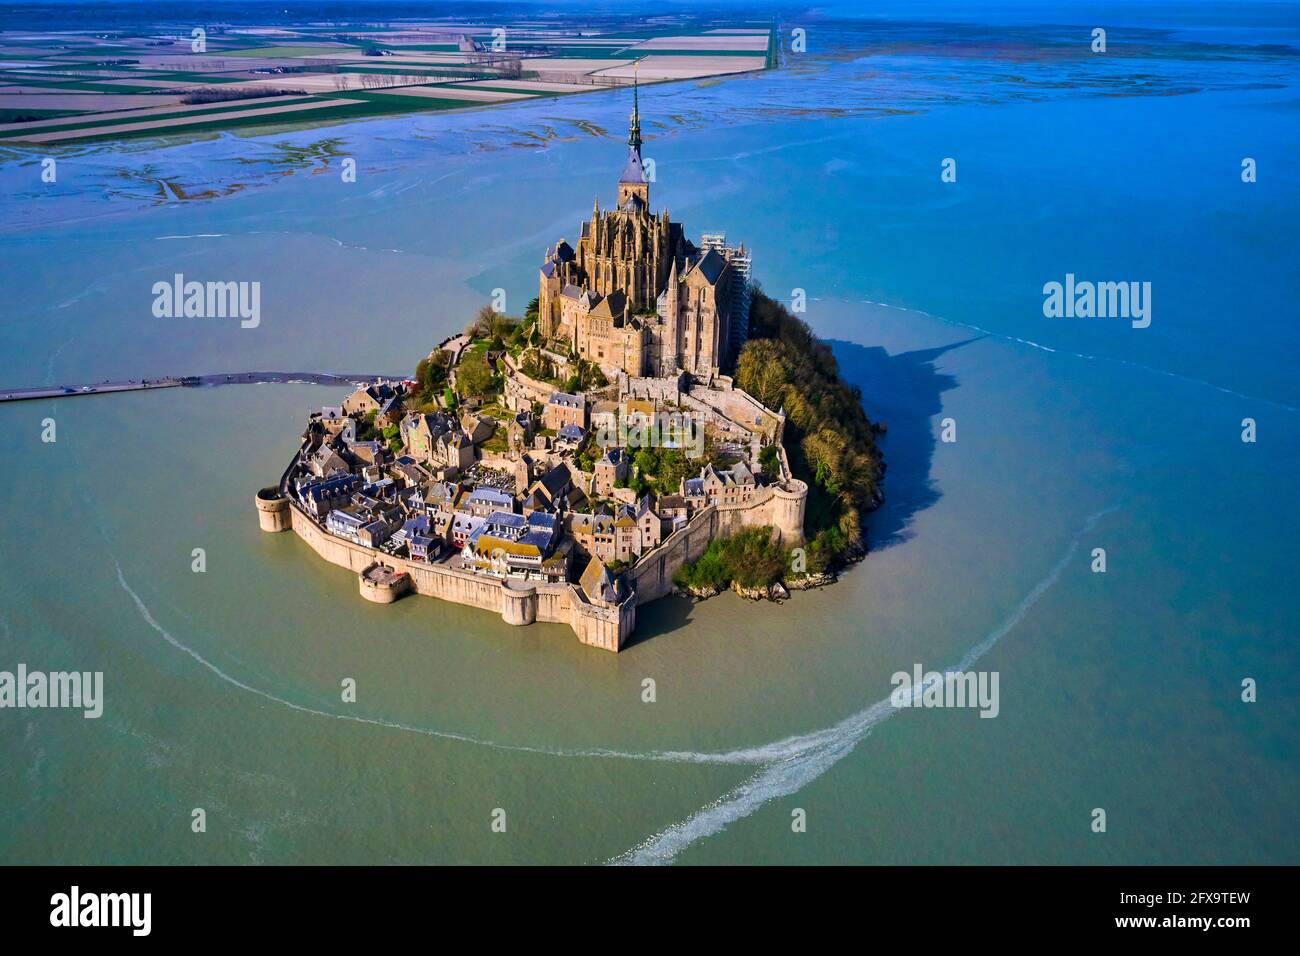 France, Normandy, Manche department, Bay of Mont Saint-Michel Unesco World Heritage, Abbey of Mont Saint-Michel Stock Photo